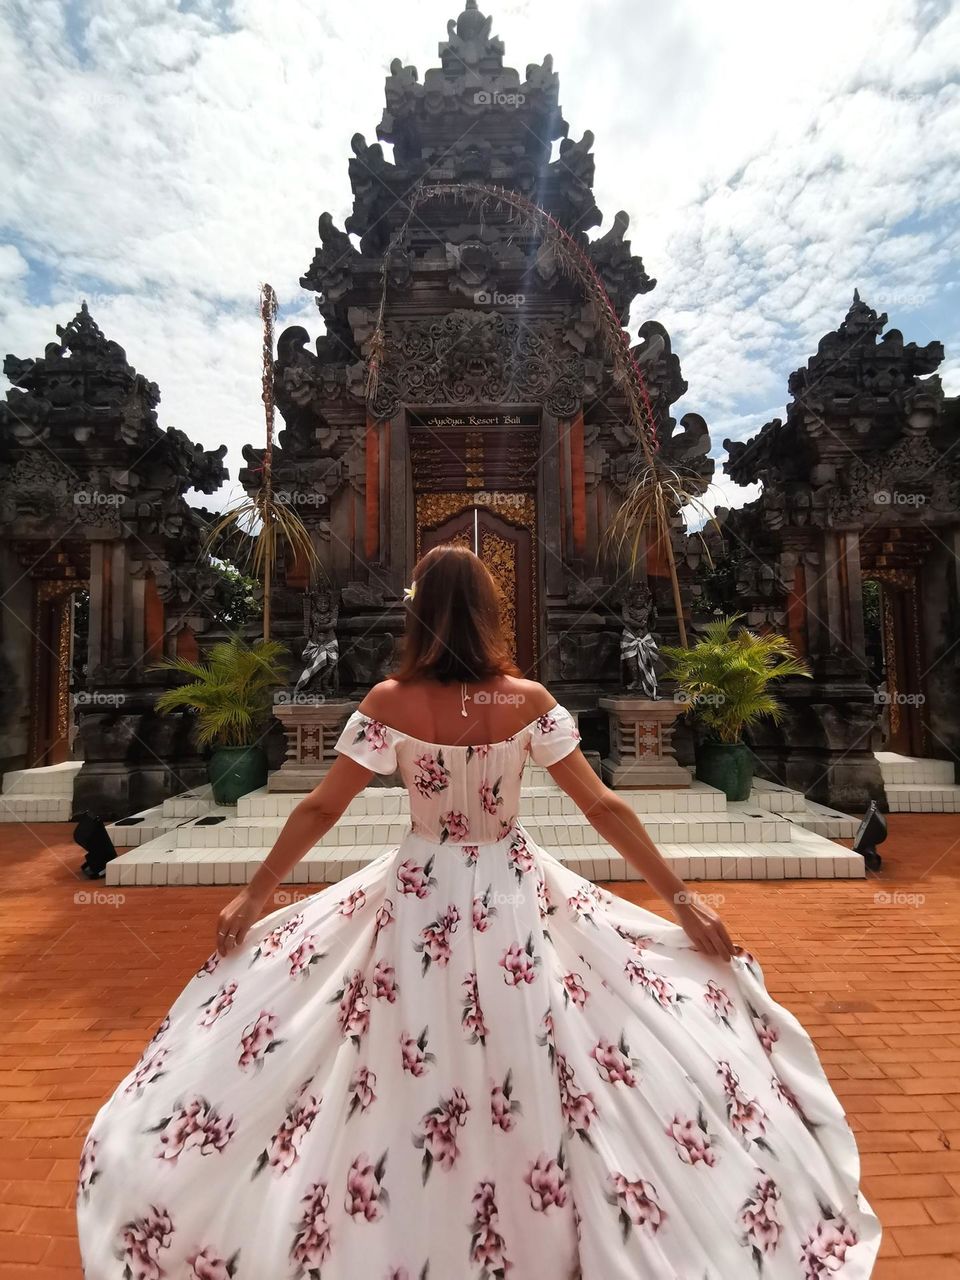 Amazing Bali architecture. Woman, summer, nice dress. Travel time.